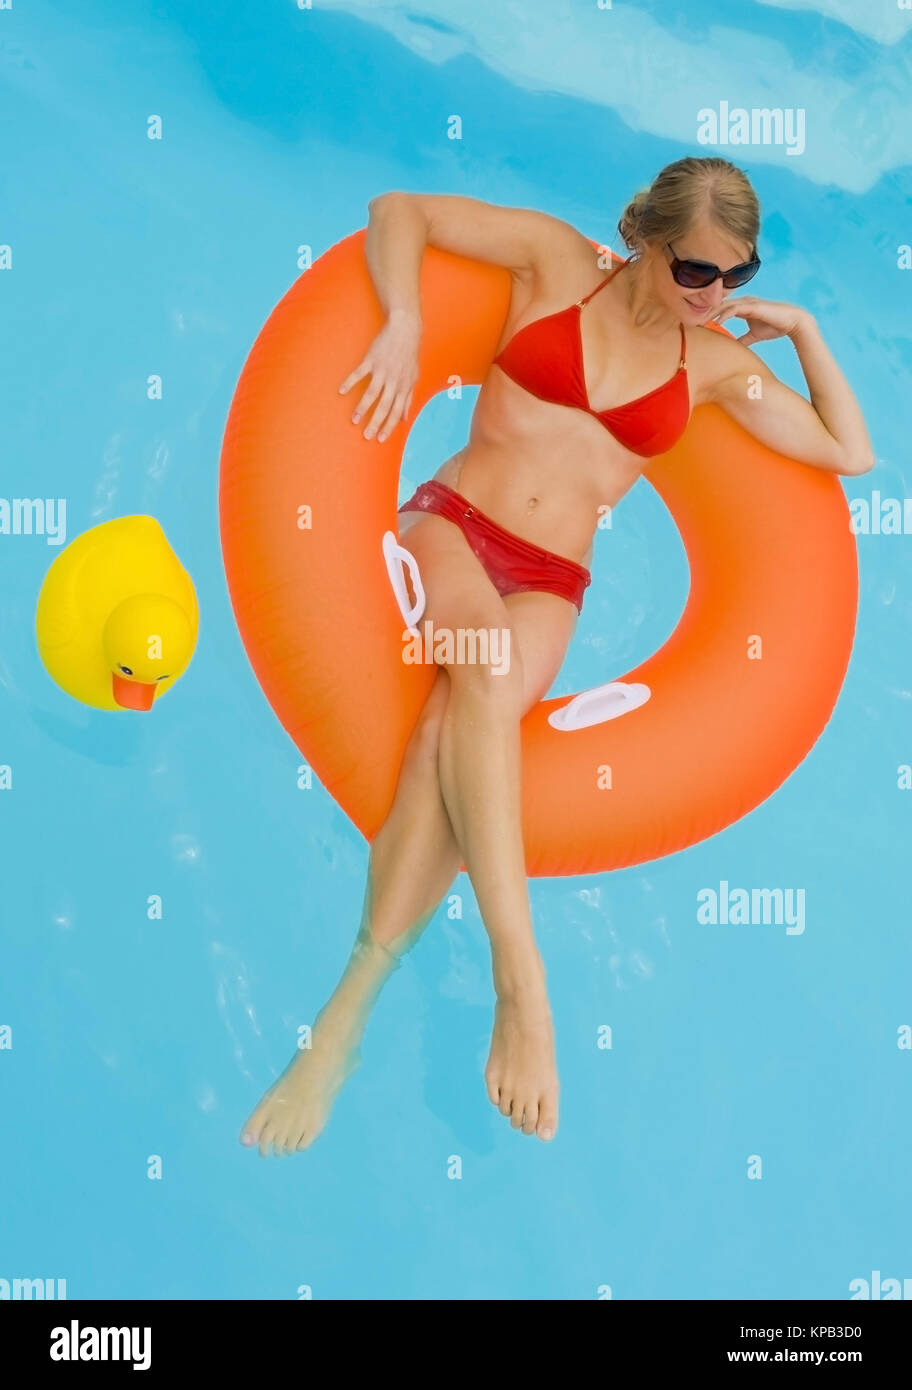 Modello di rilascio, Junge Frau im Bikini entspannt im Schwimmreifen im Pool - giovane donna con pneumatici flottanti in piscina Foto Stock